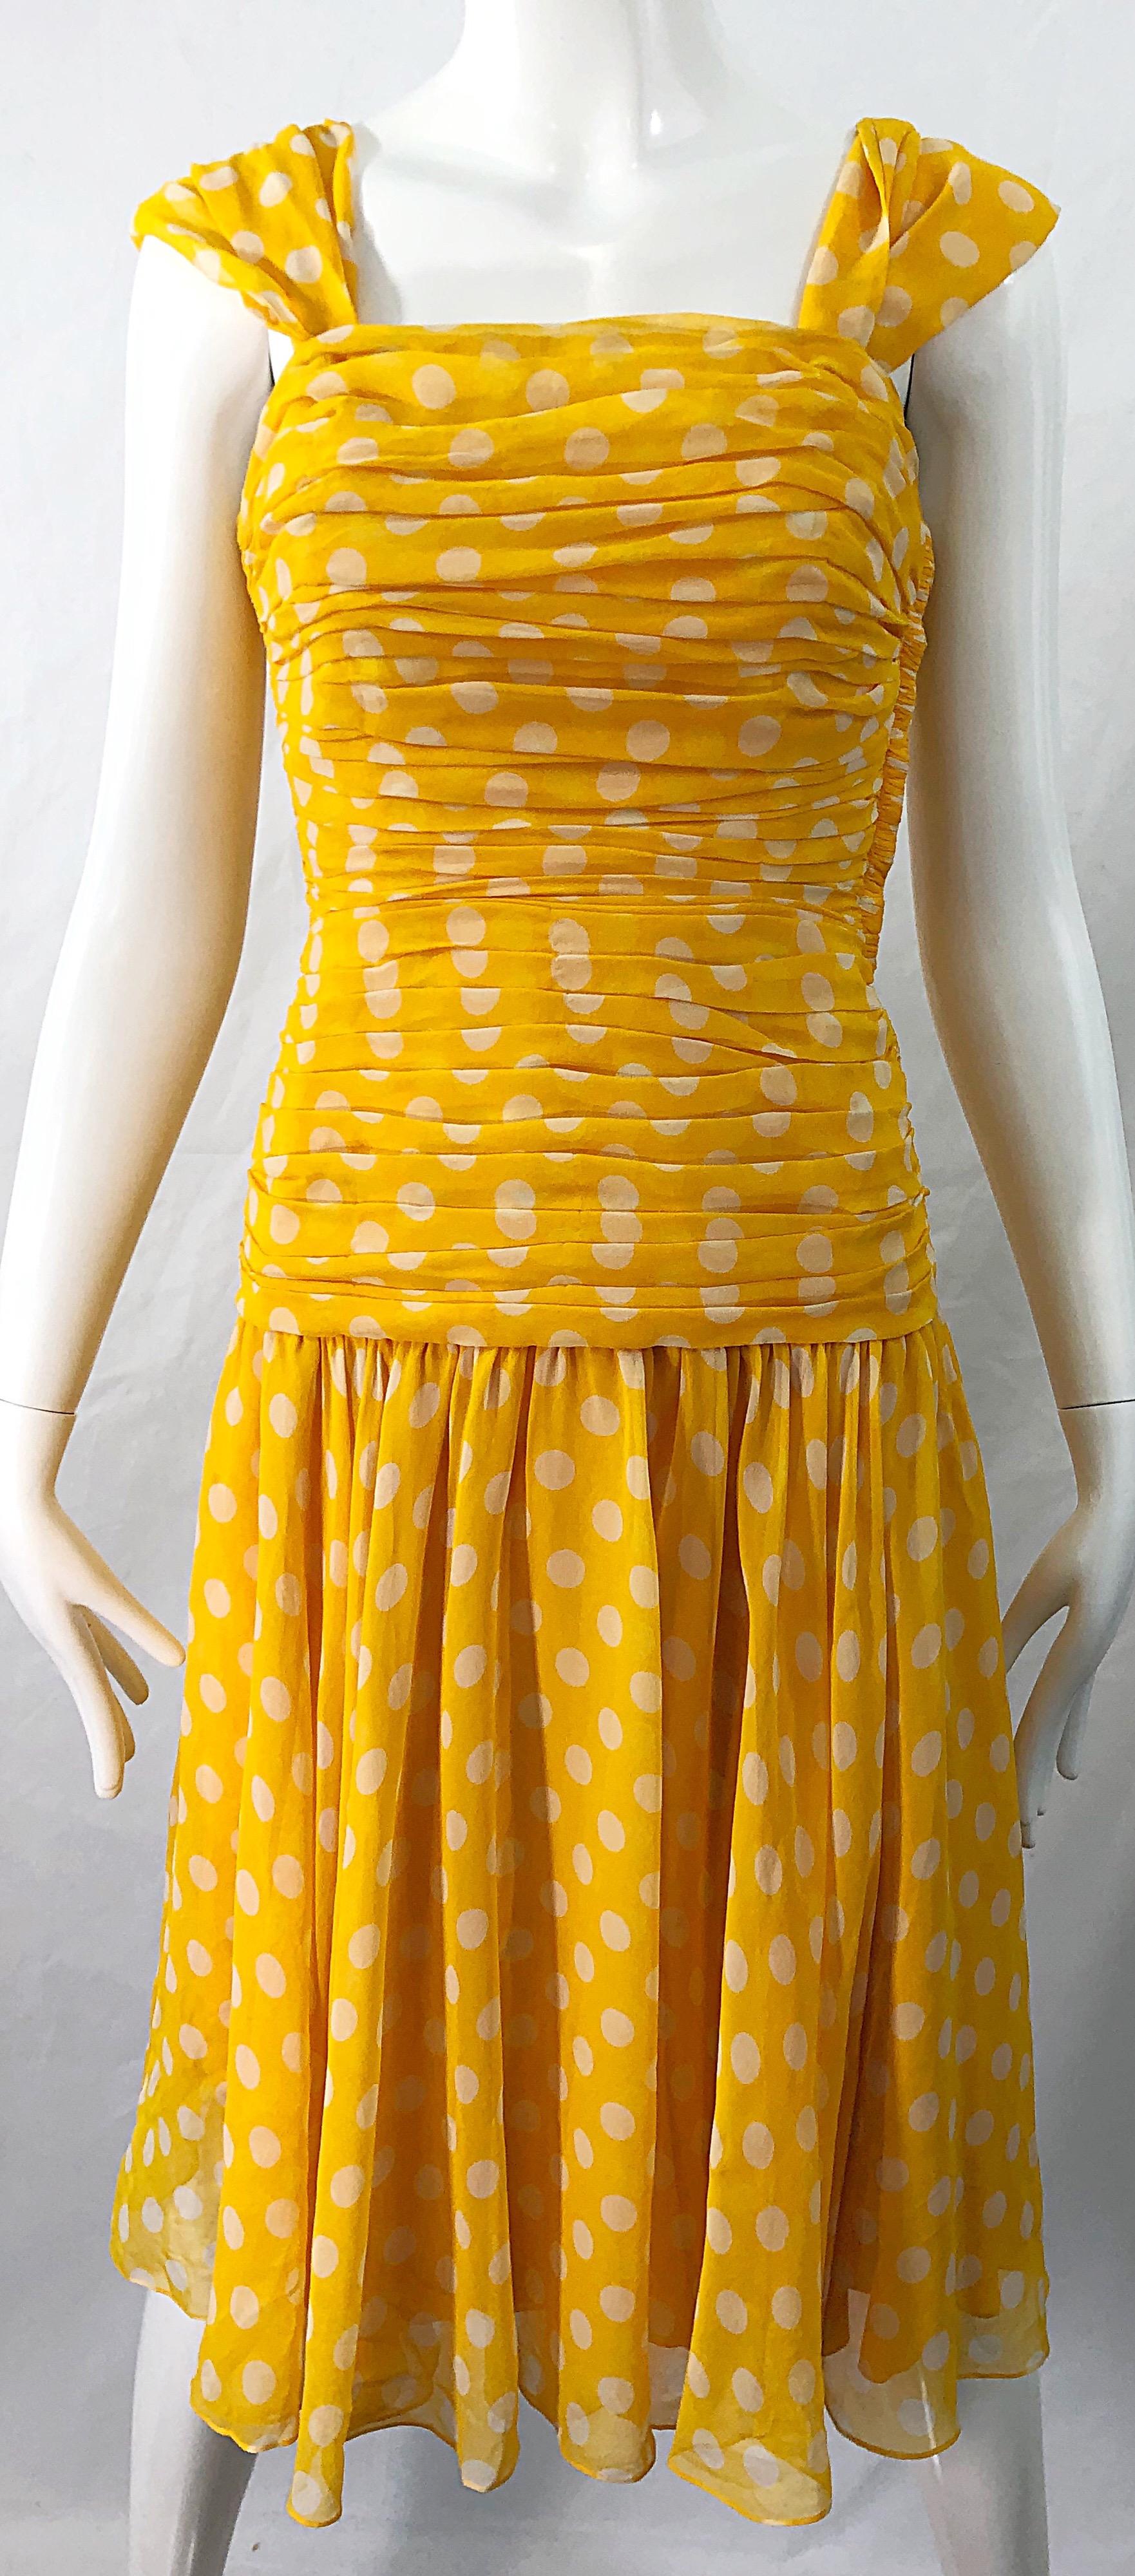 Adele Simpson 1980s Size 4 Yellow White Silk Chiffon Polka Dot Vintage 80s Dress For Sale 1